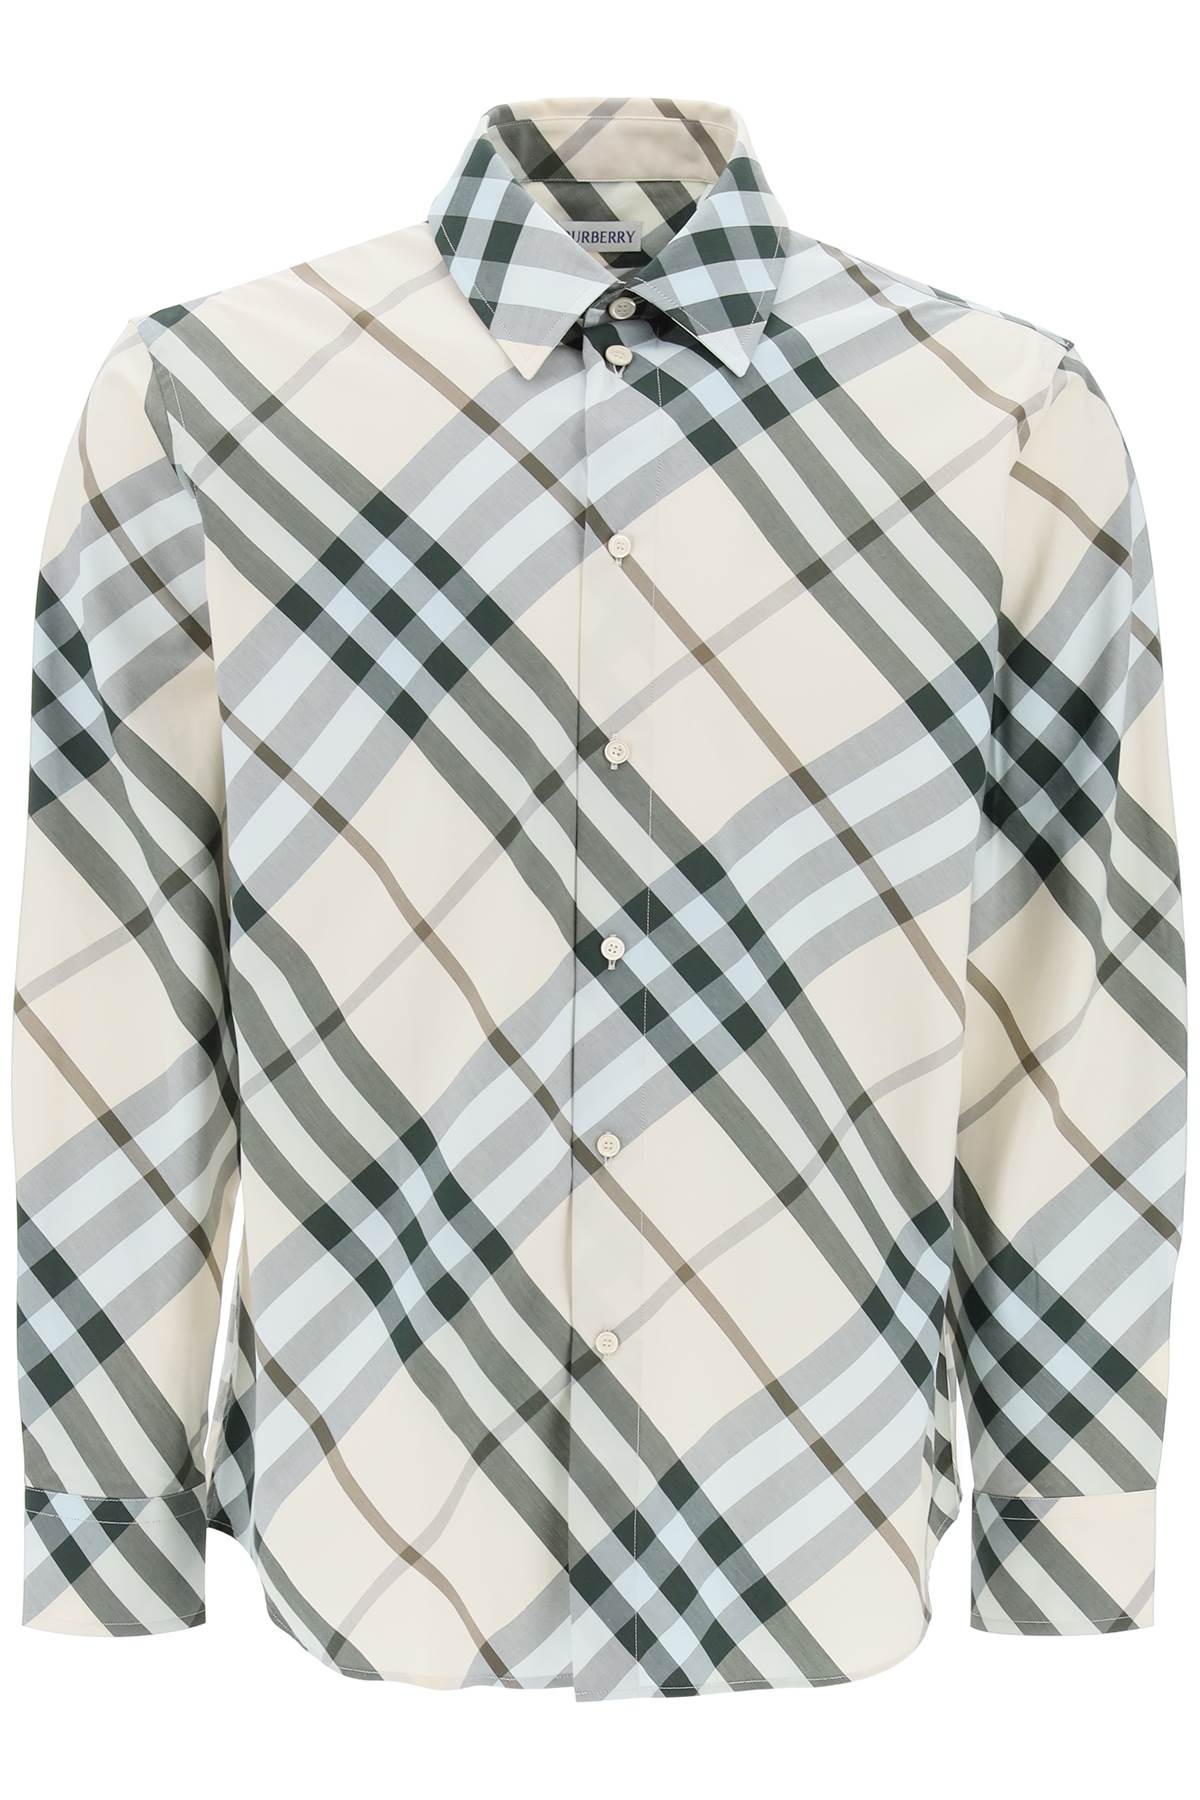 Burberry BURBERRY ered cotton long-sleeved shirt